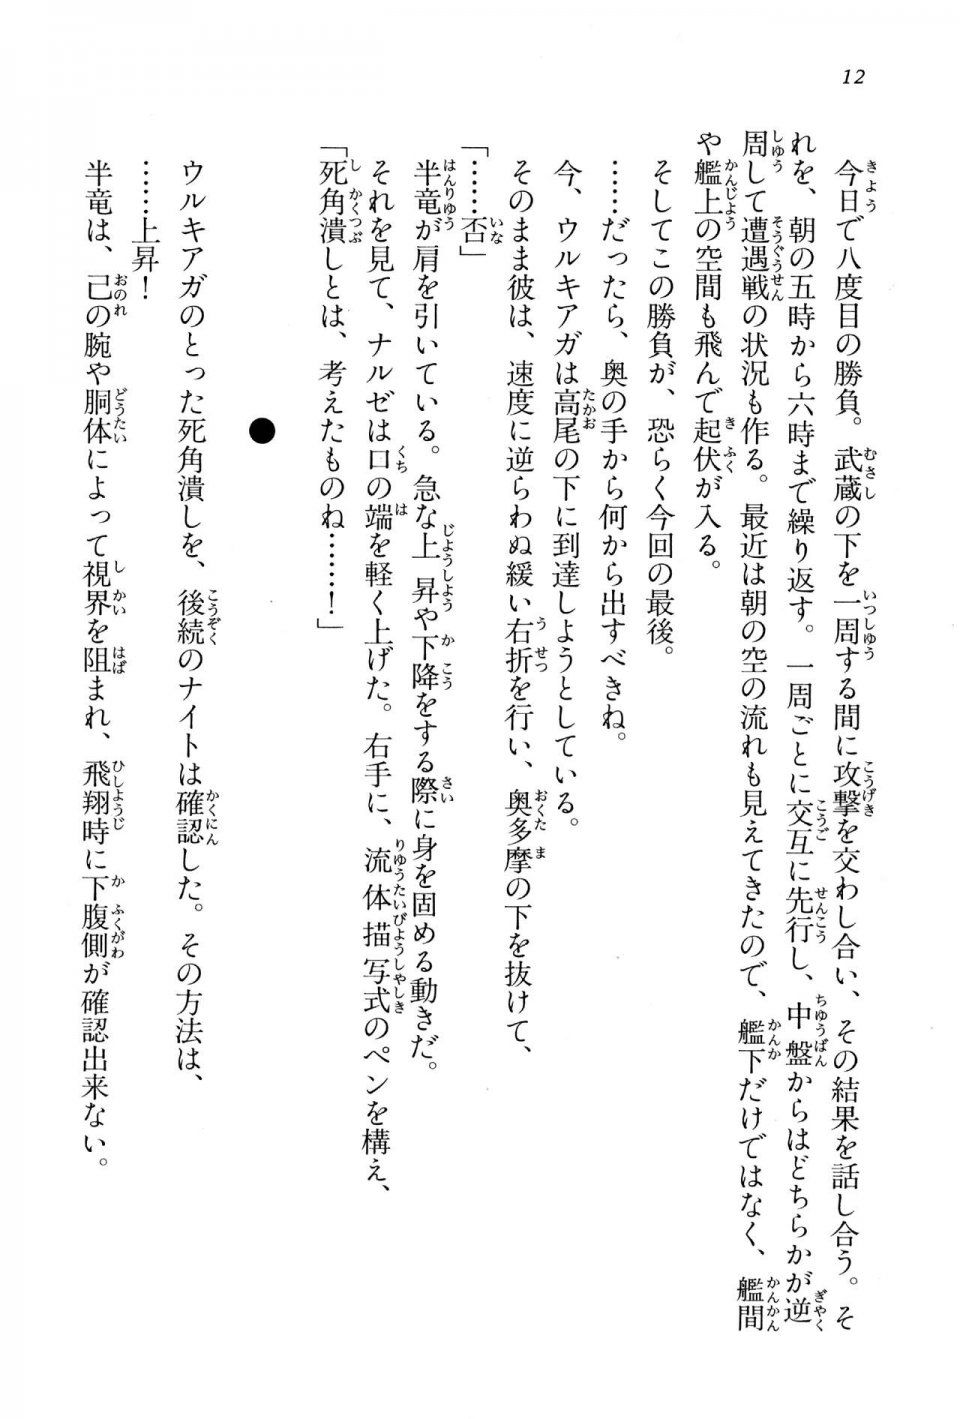 Kyoukai Senjou no Horizon BD Special Mininovel Vol 2(1B) - Photo #16